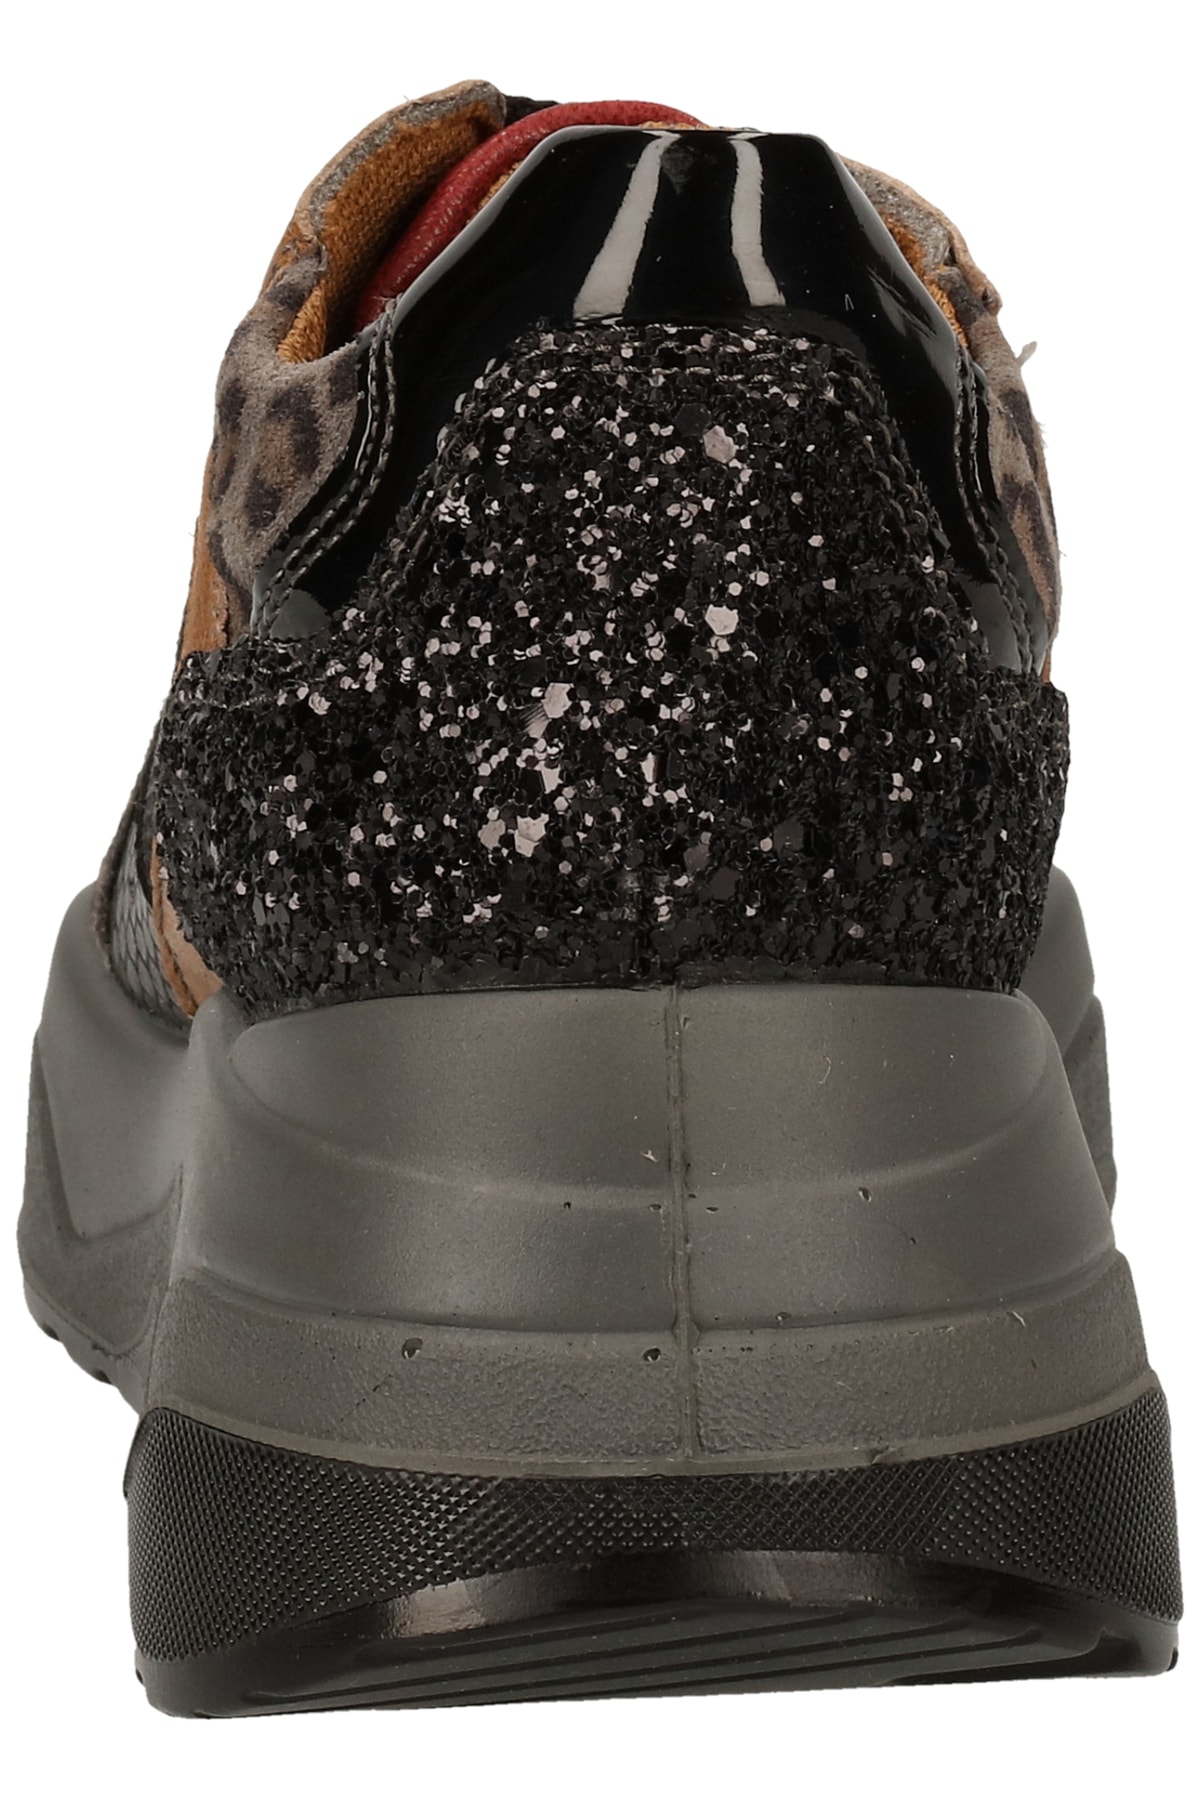 IGI&amp;CO Sneaker Grau Flacher Absatz Fast ausverkauft FV8283